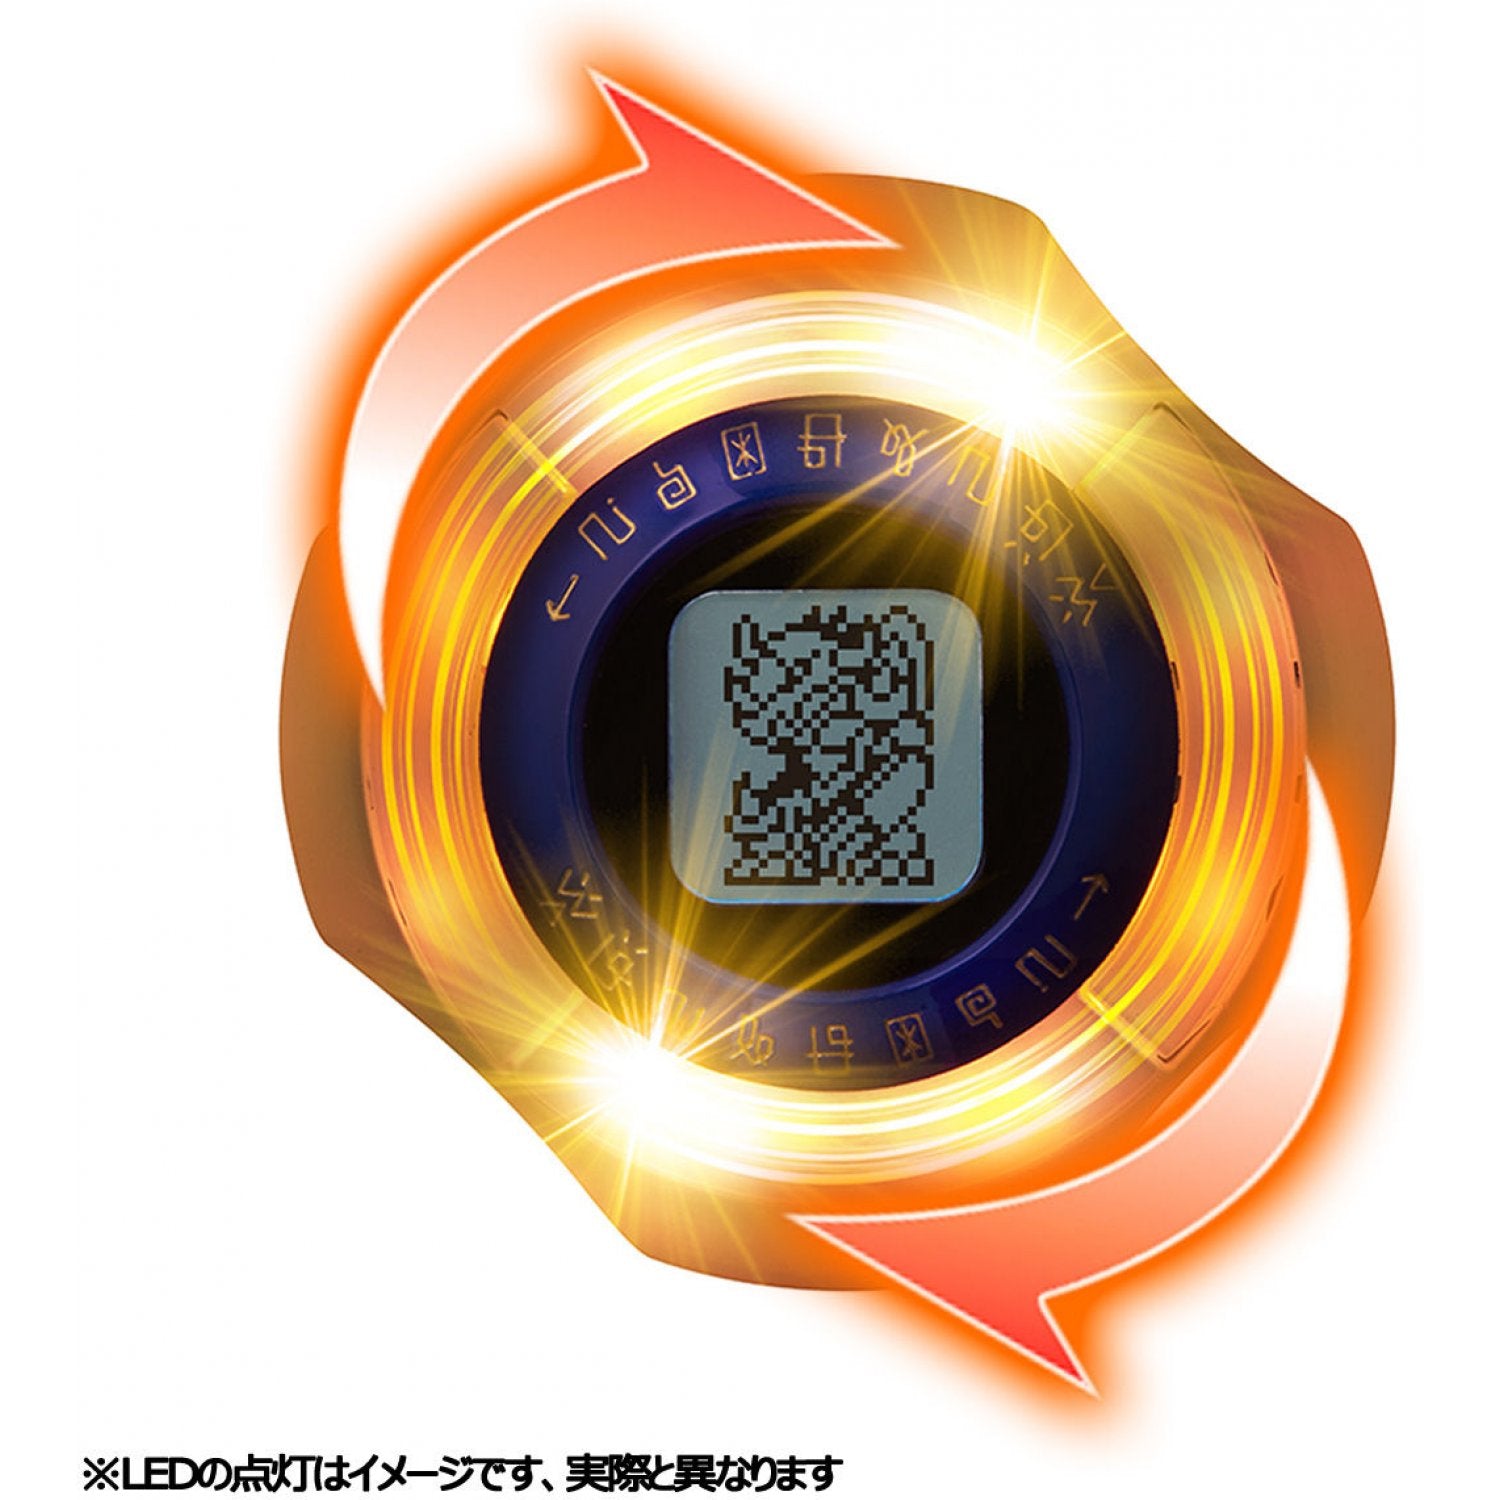 Bandai Digimon Adventure: Digivice